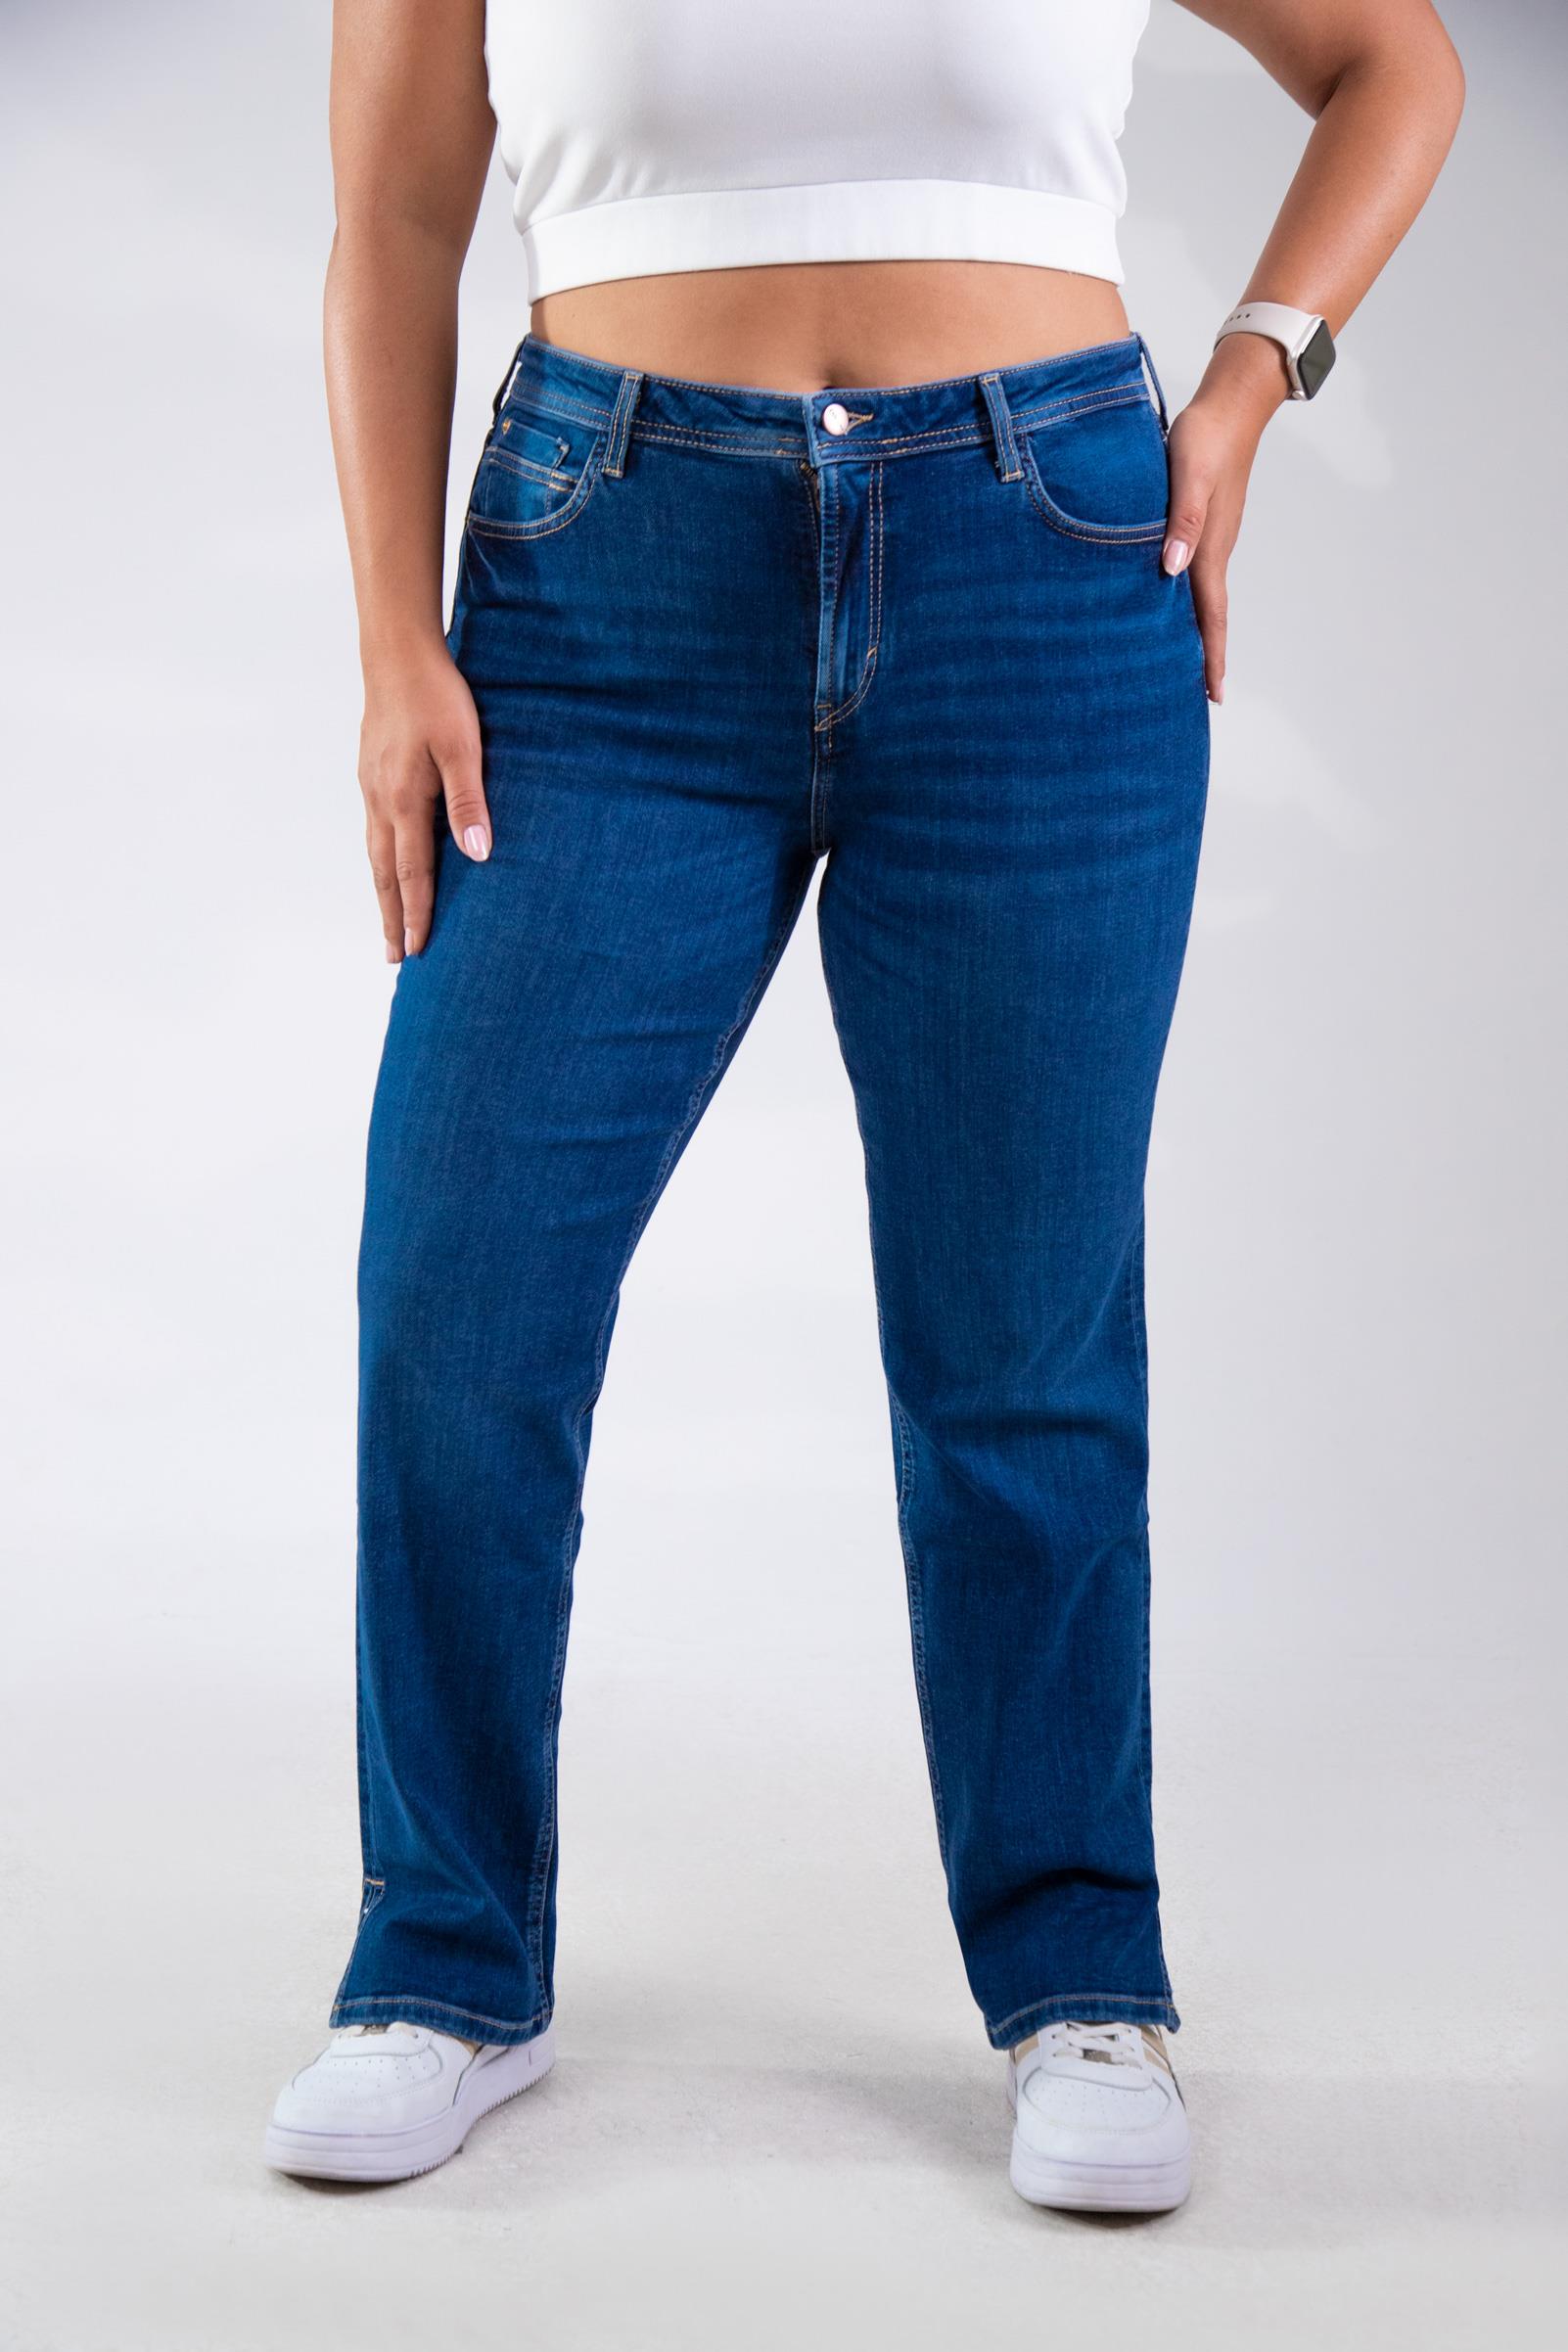 Plus Size Lee Side-Elastic Jeans